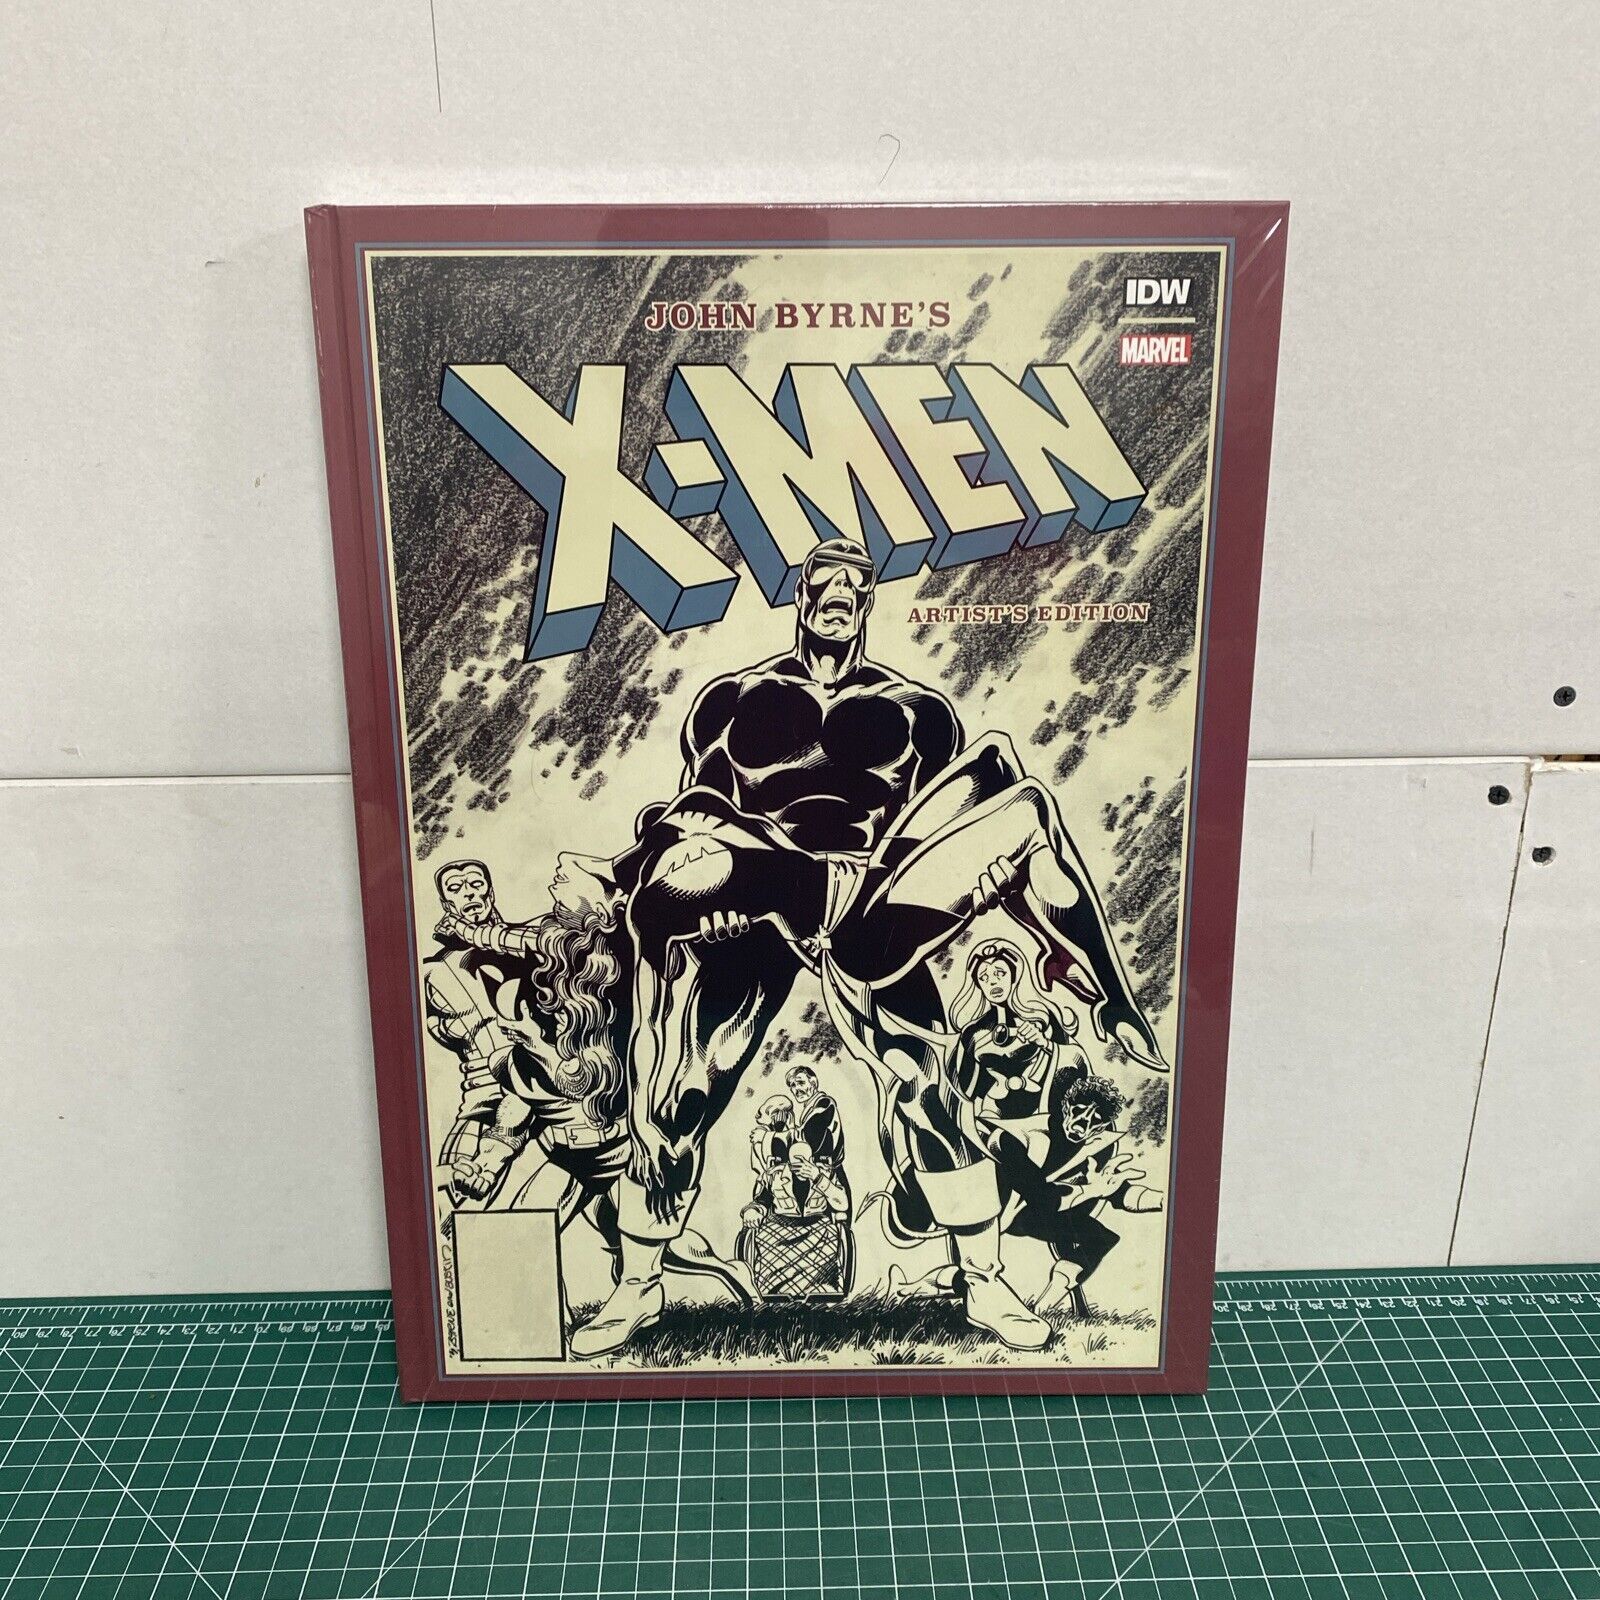 John Byrne's X-Men Artist's Edition - Hardcover large format book B5